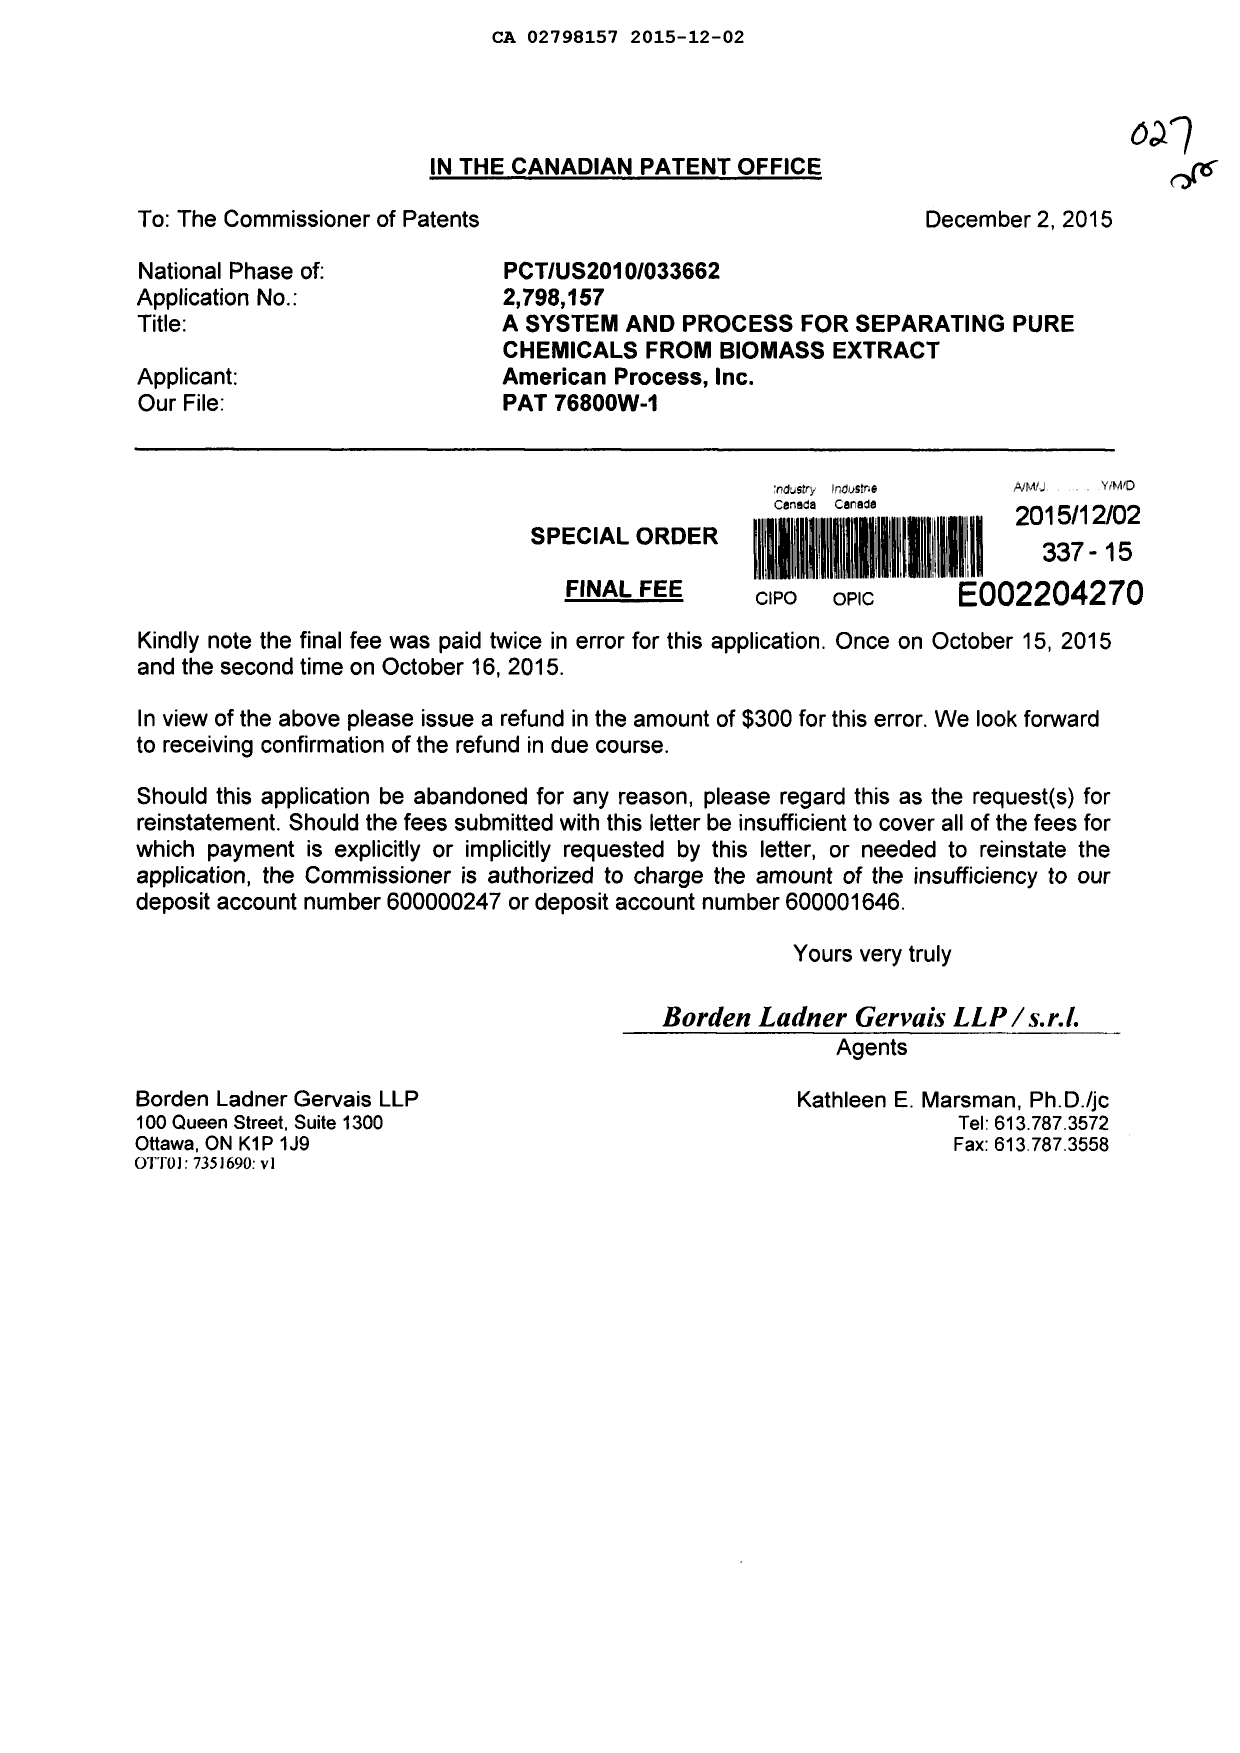 Canadian Patent Document 2798157. Prosecution Correspondence 20151202. Image 1 of 1